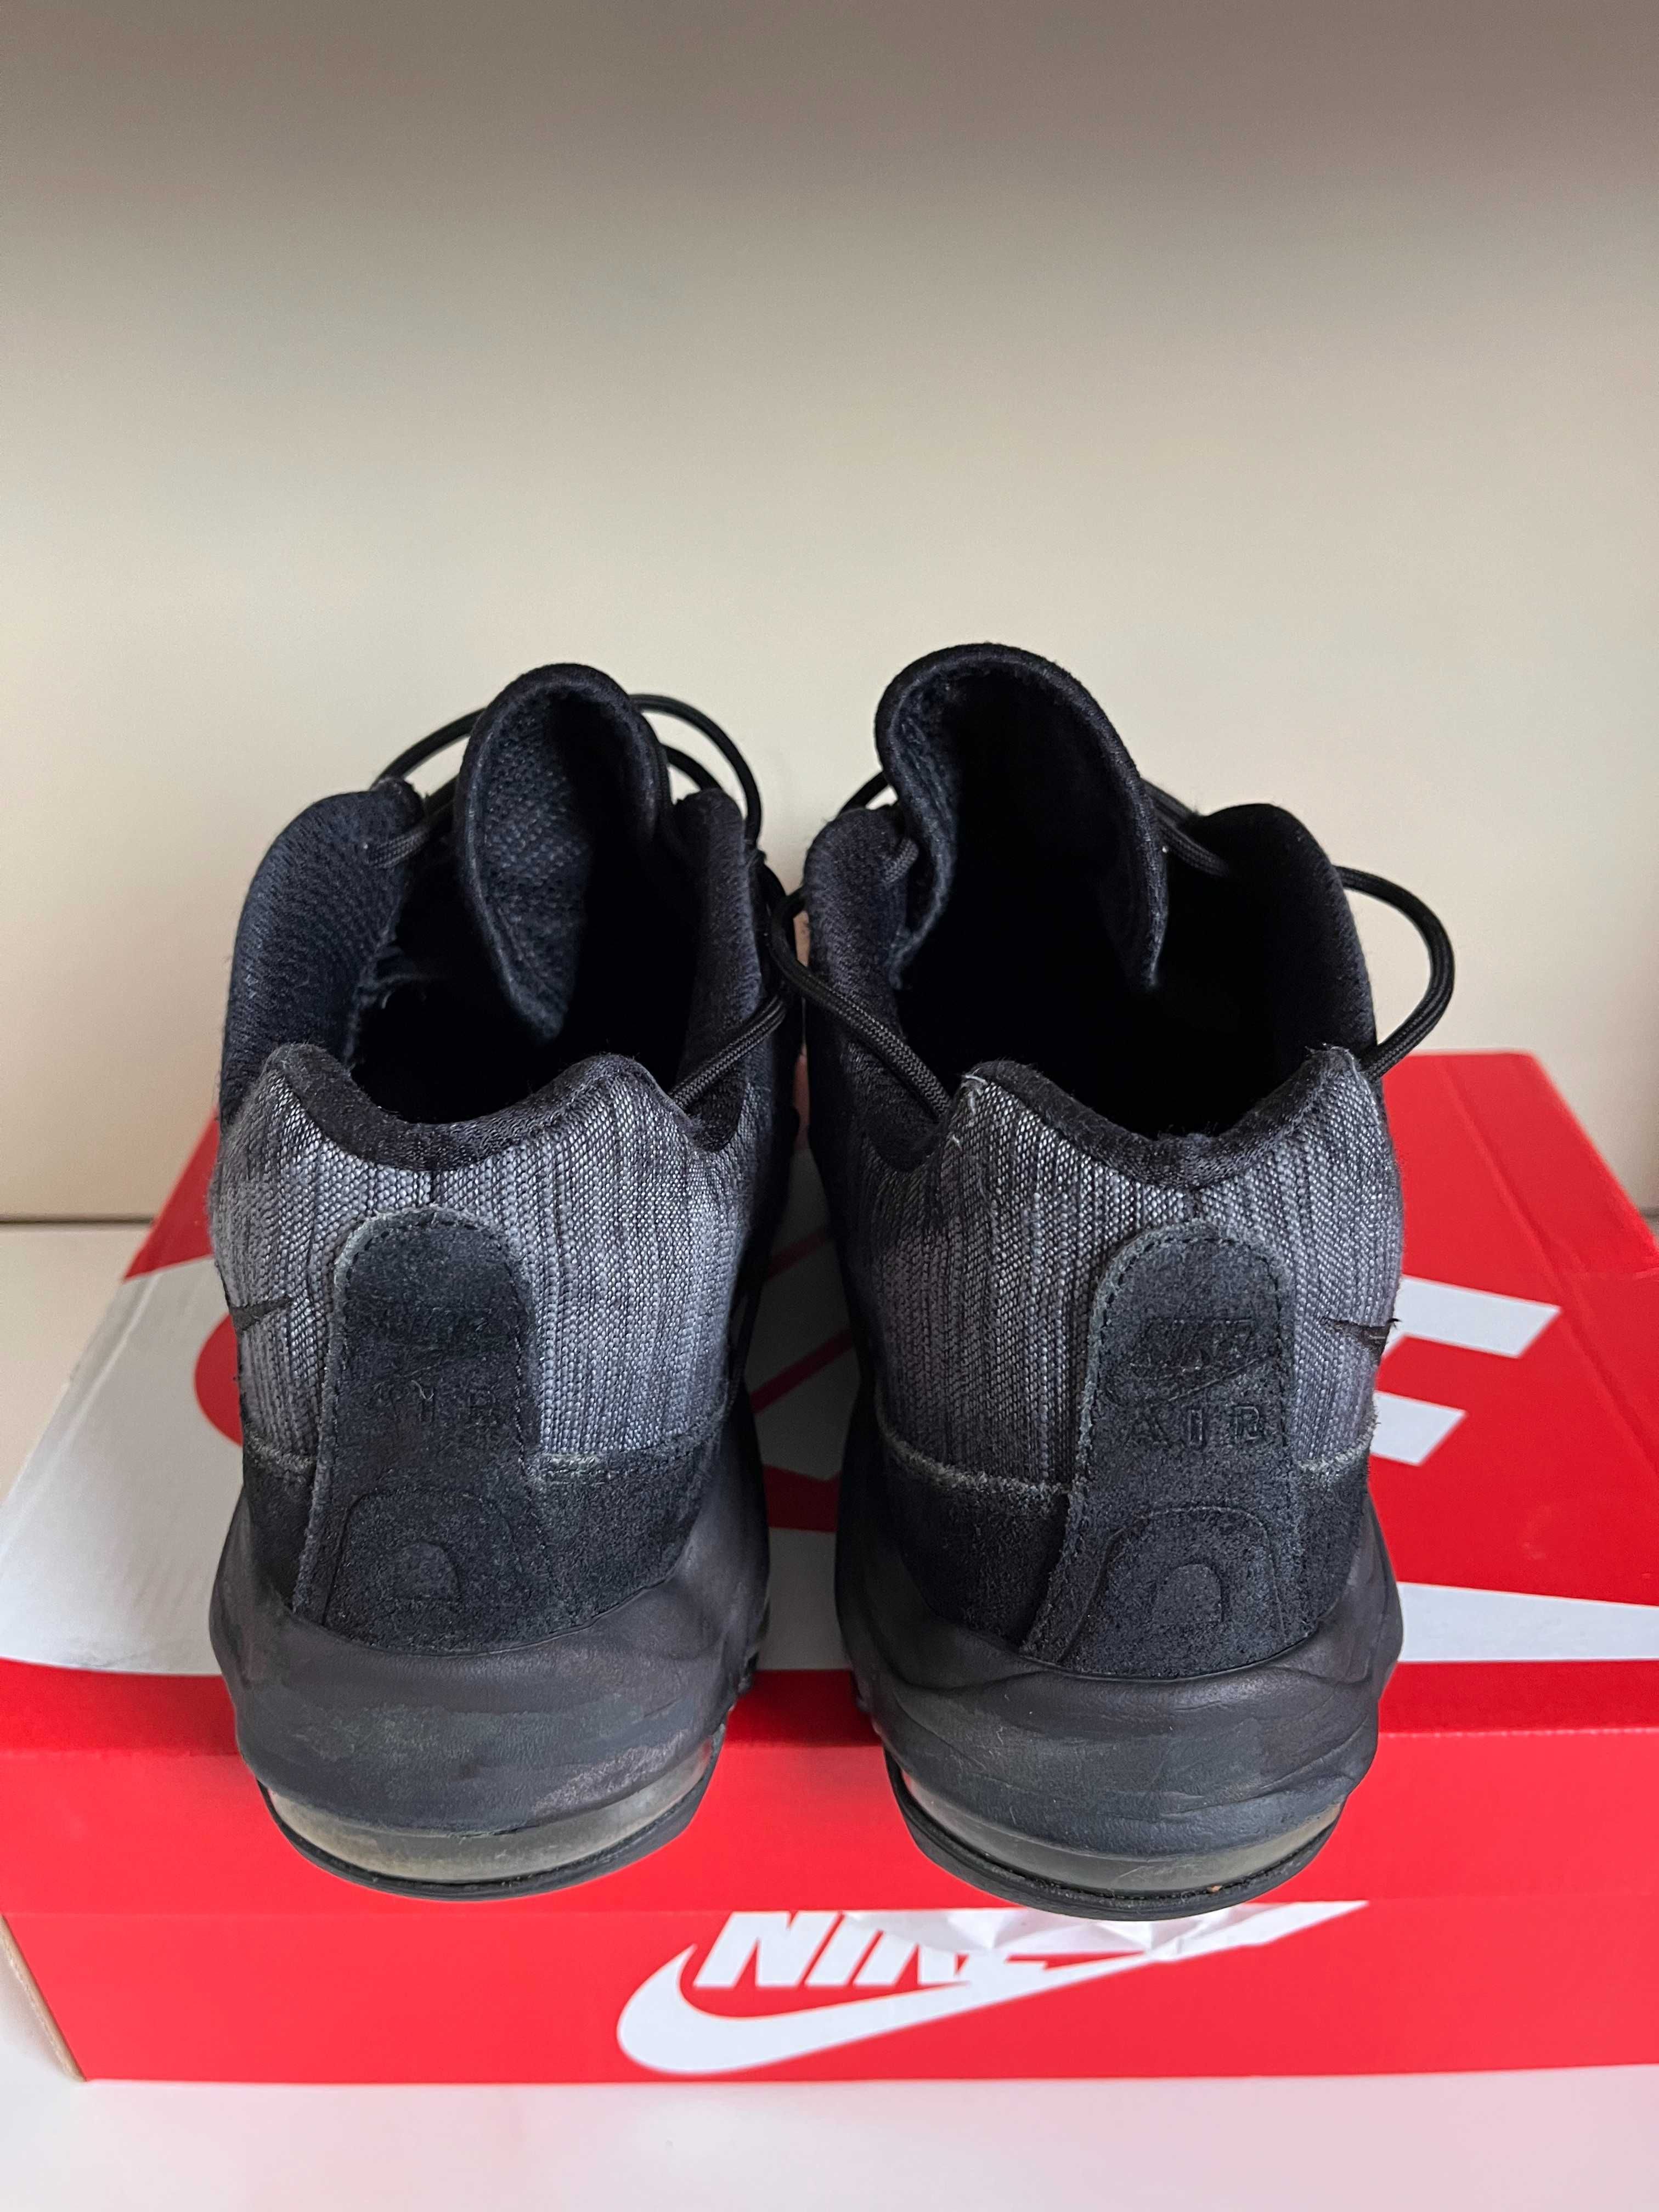 Nike Air Max 95 Ultra SE
Color: Black/Dark Grey/Black/Anthracite